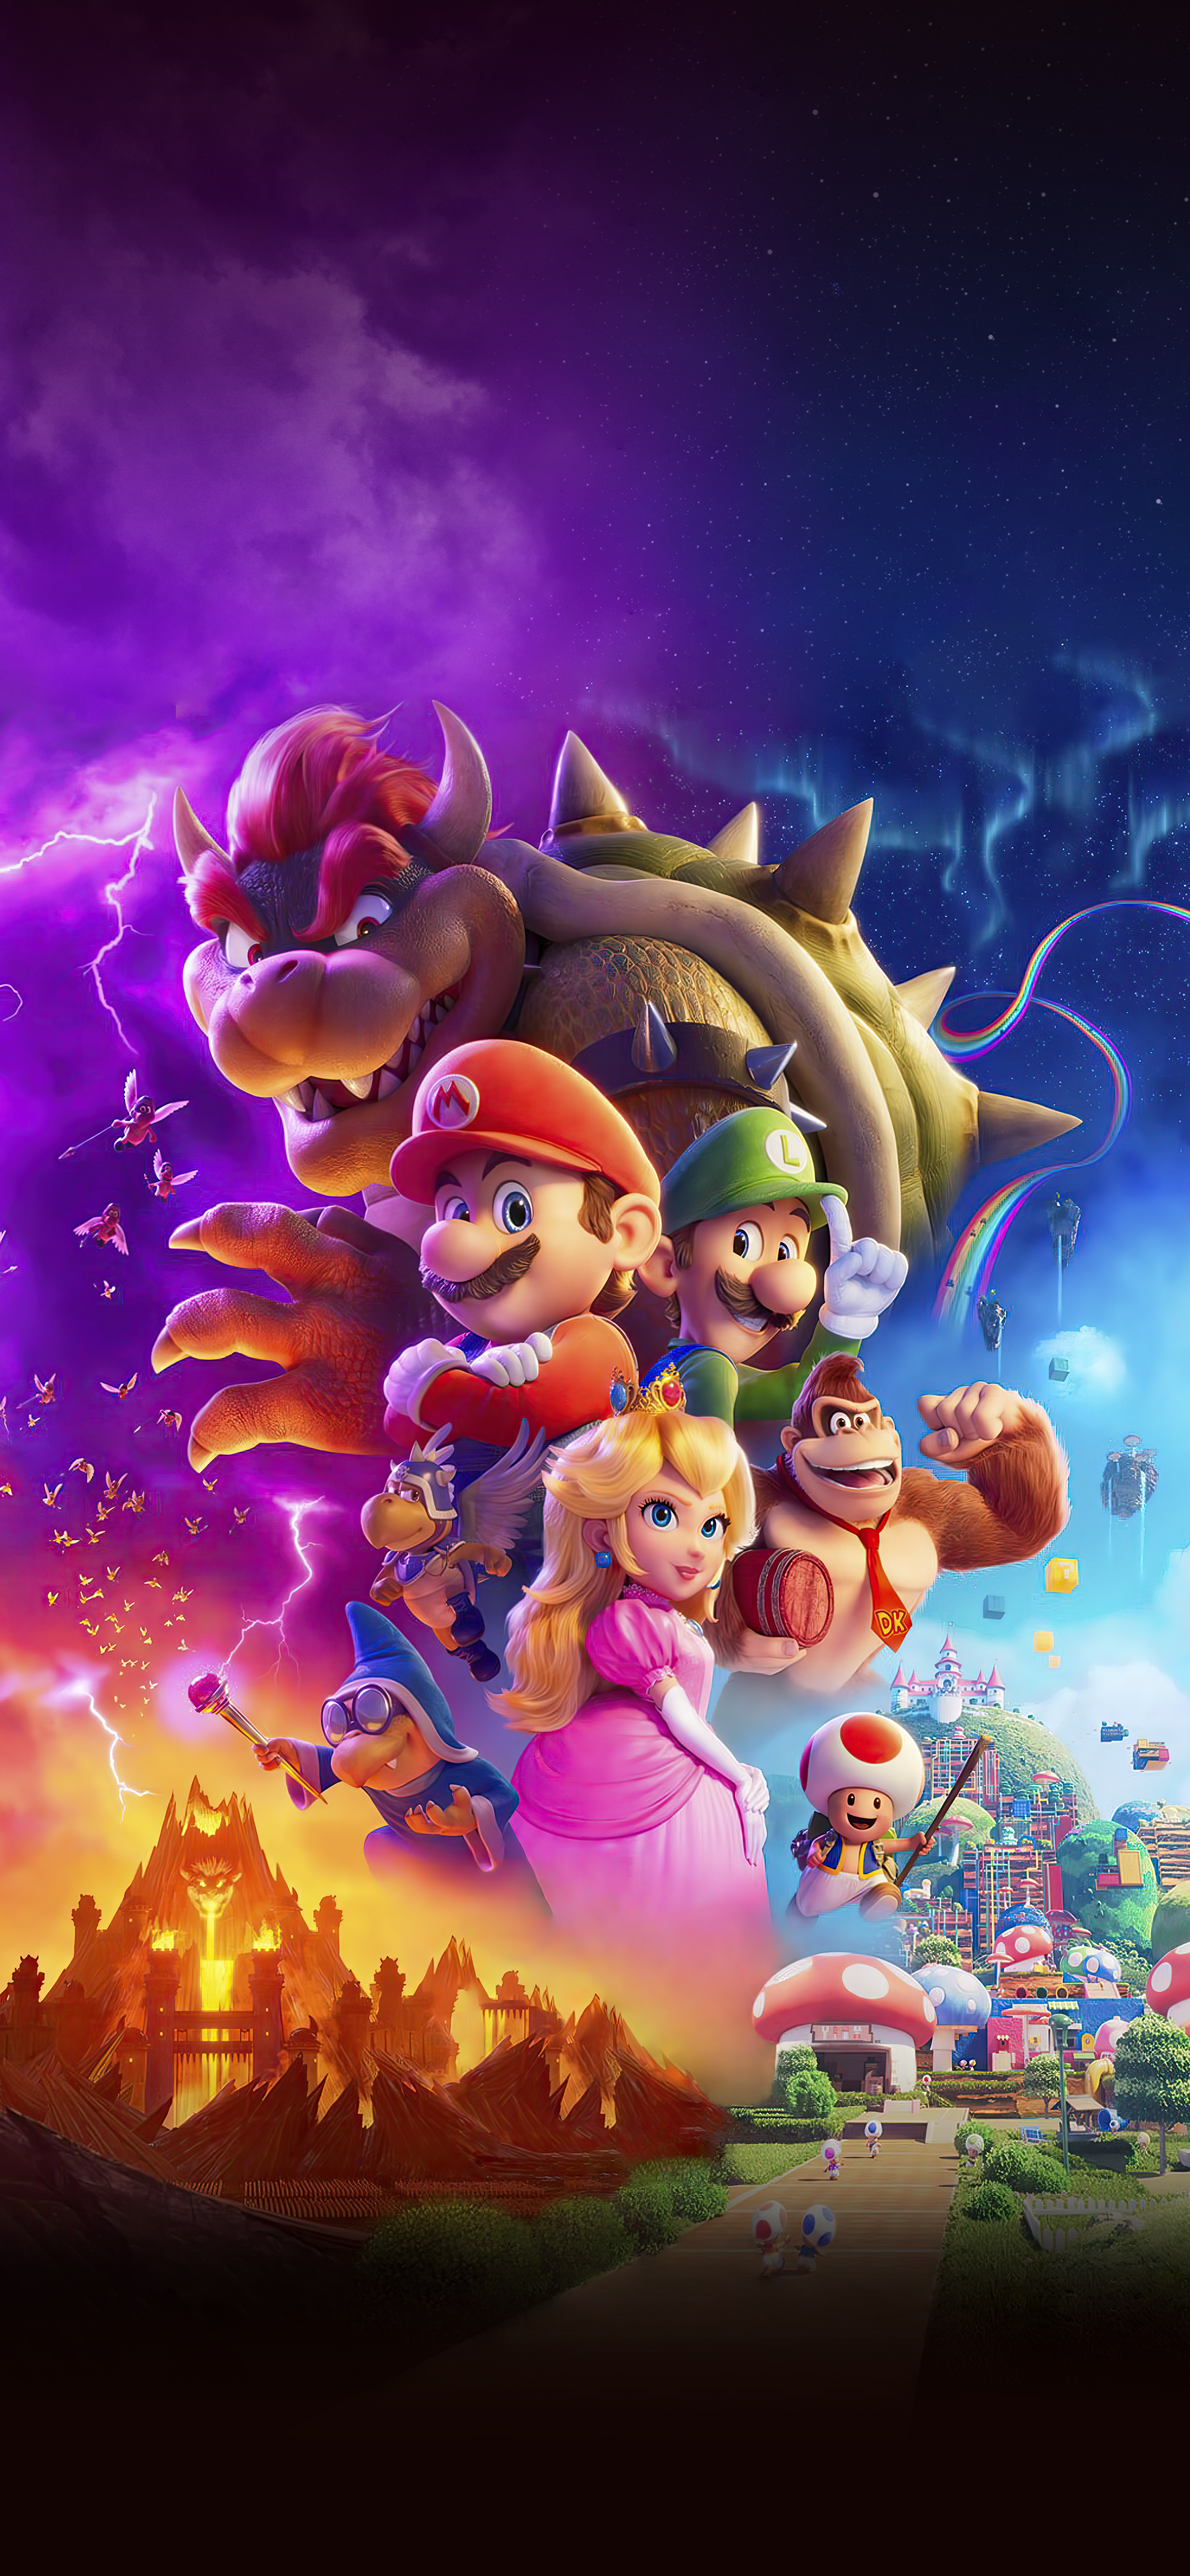 The Super Mario Bros Movie Mobile Wallpaper r